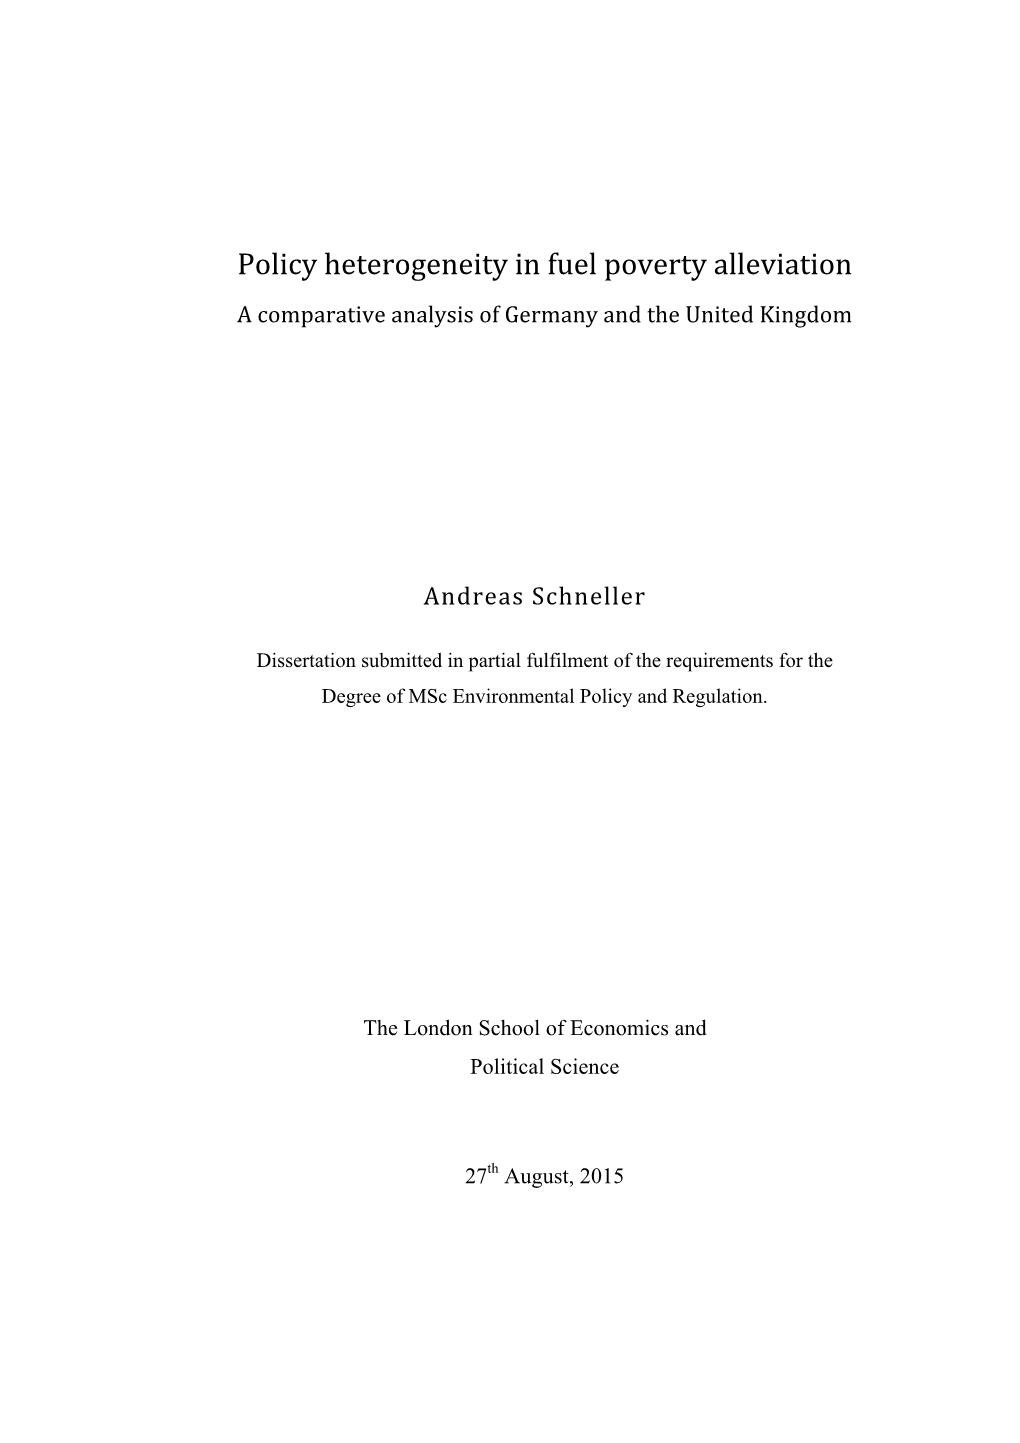 Policy Heterogeneity in Fuel Poverty Alleviation (Dissertation)